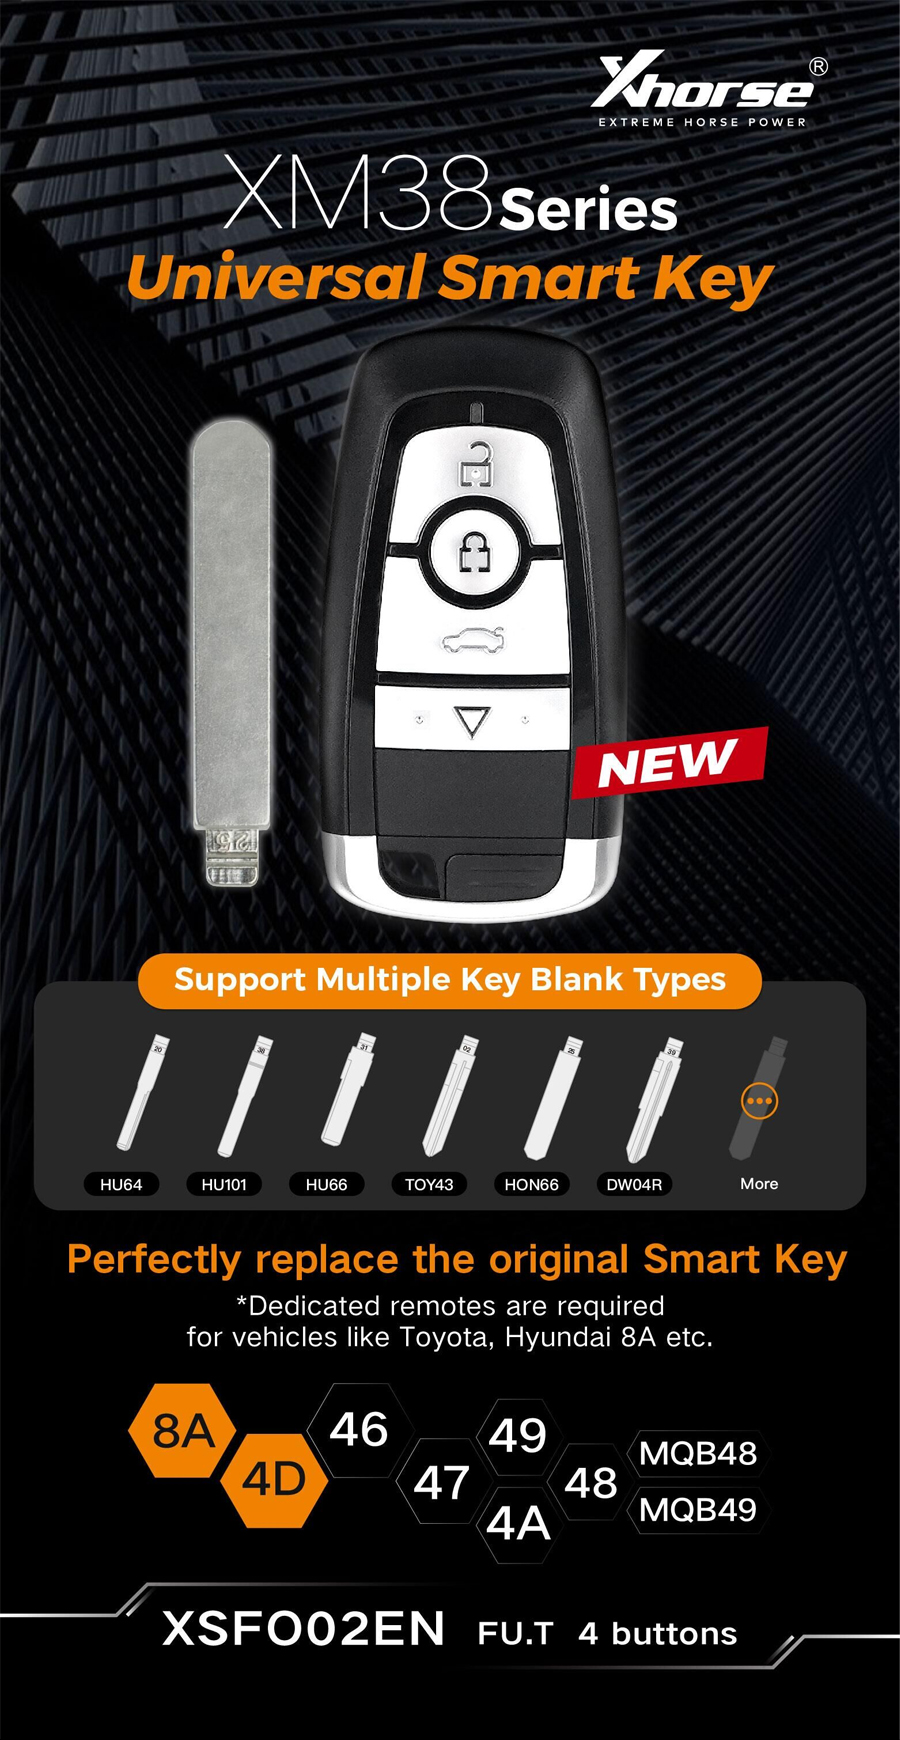 xhorse xm38 series smart key